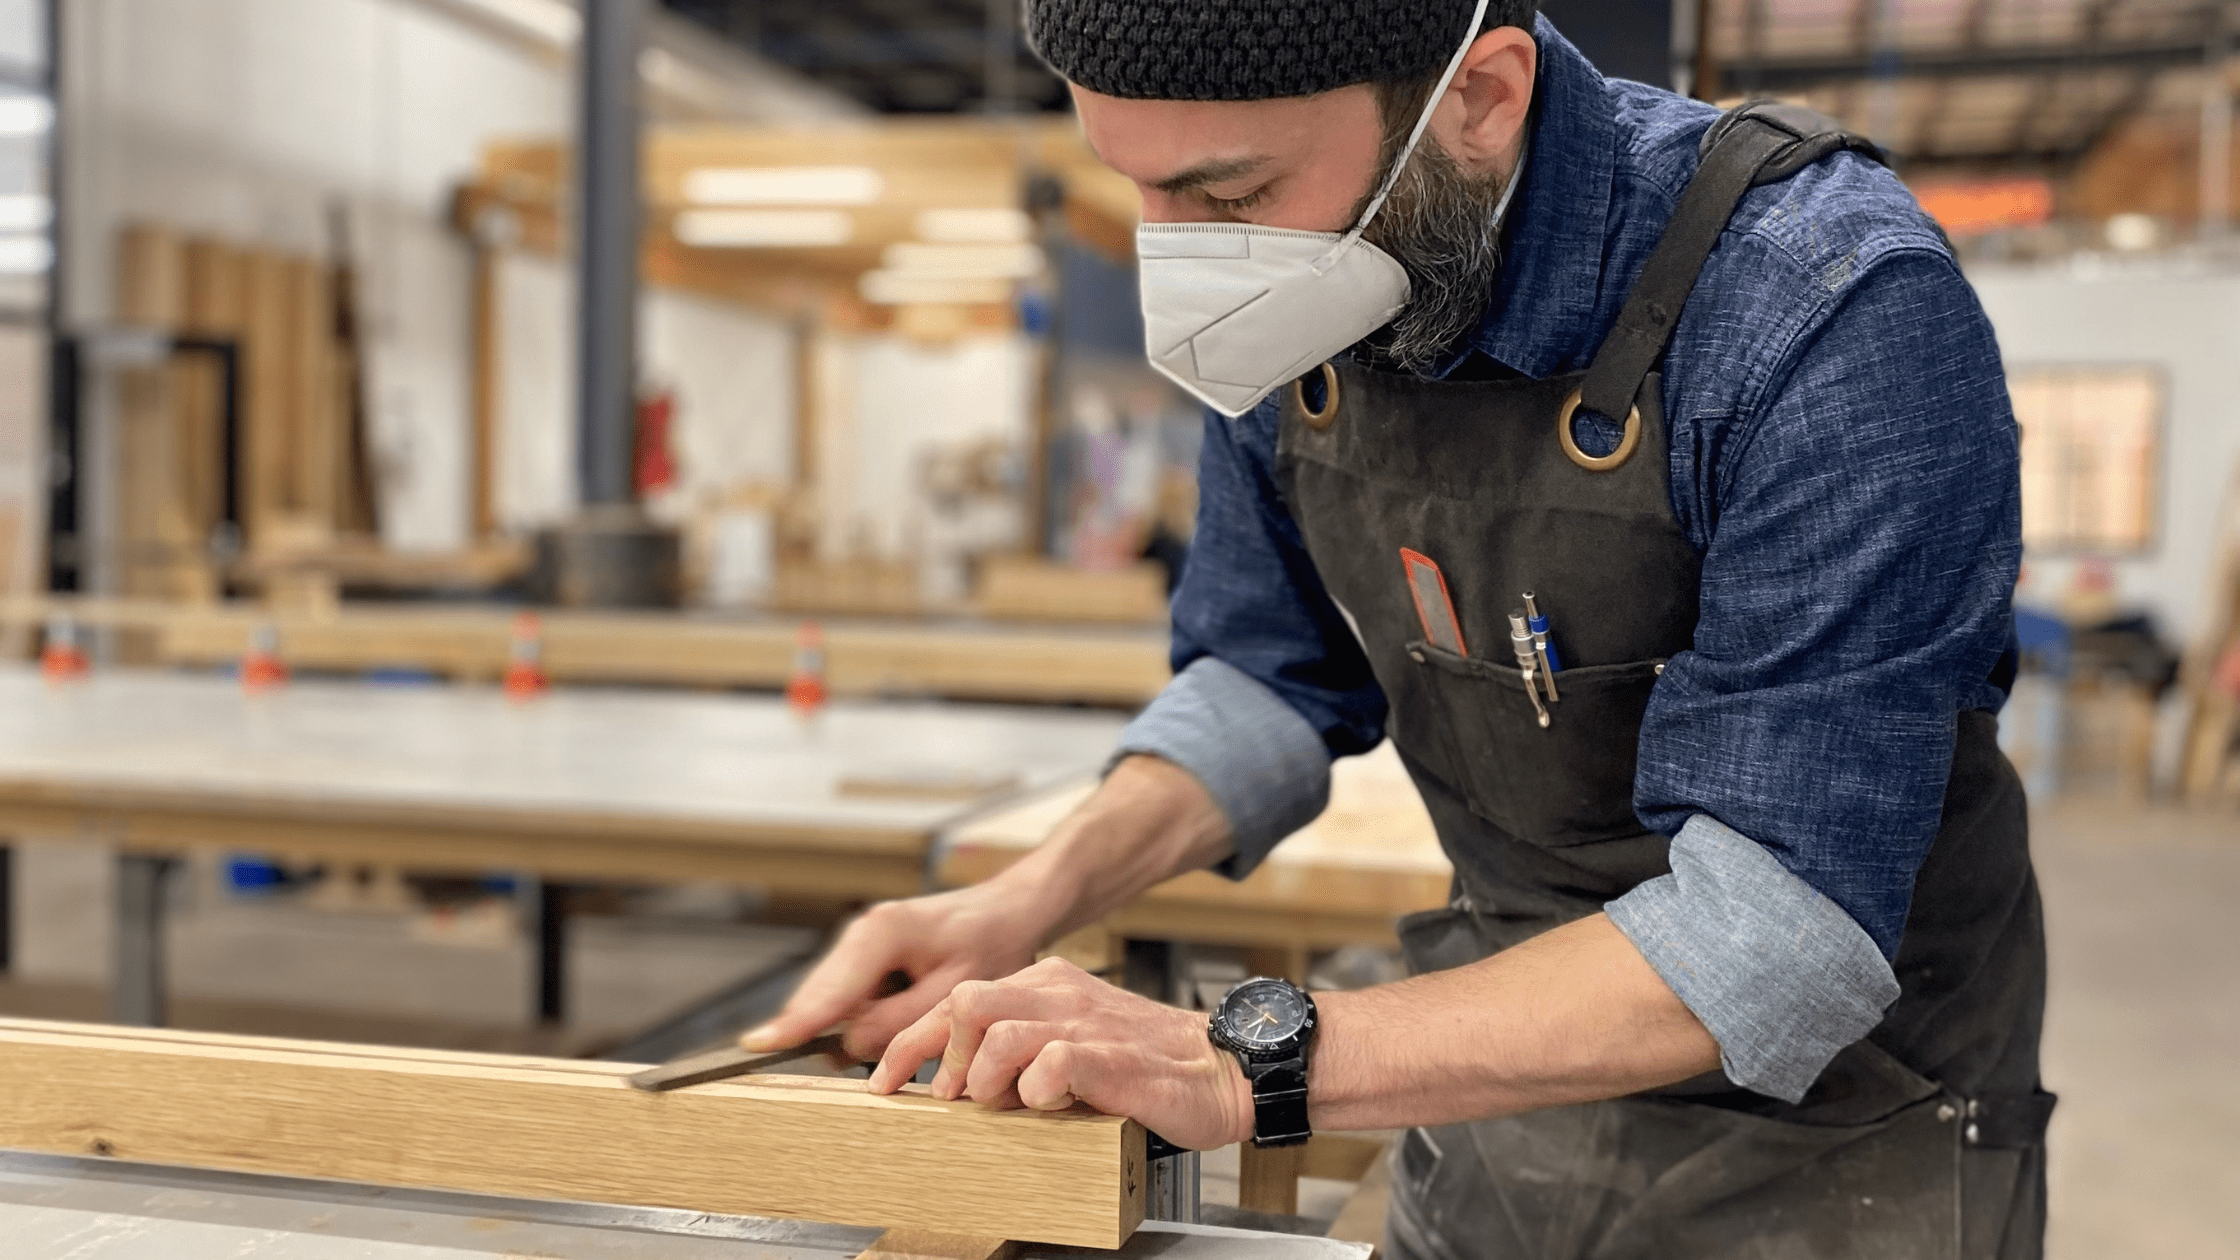 Meet Our Monthly Maker: Michael Ferrin, Woodworker